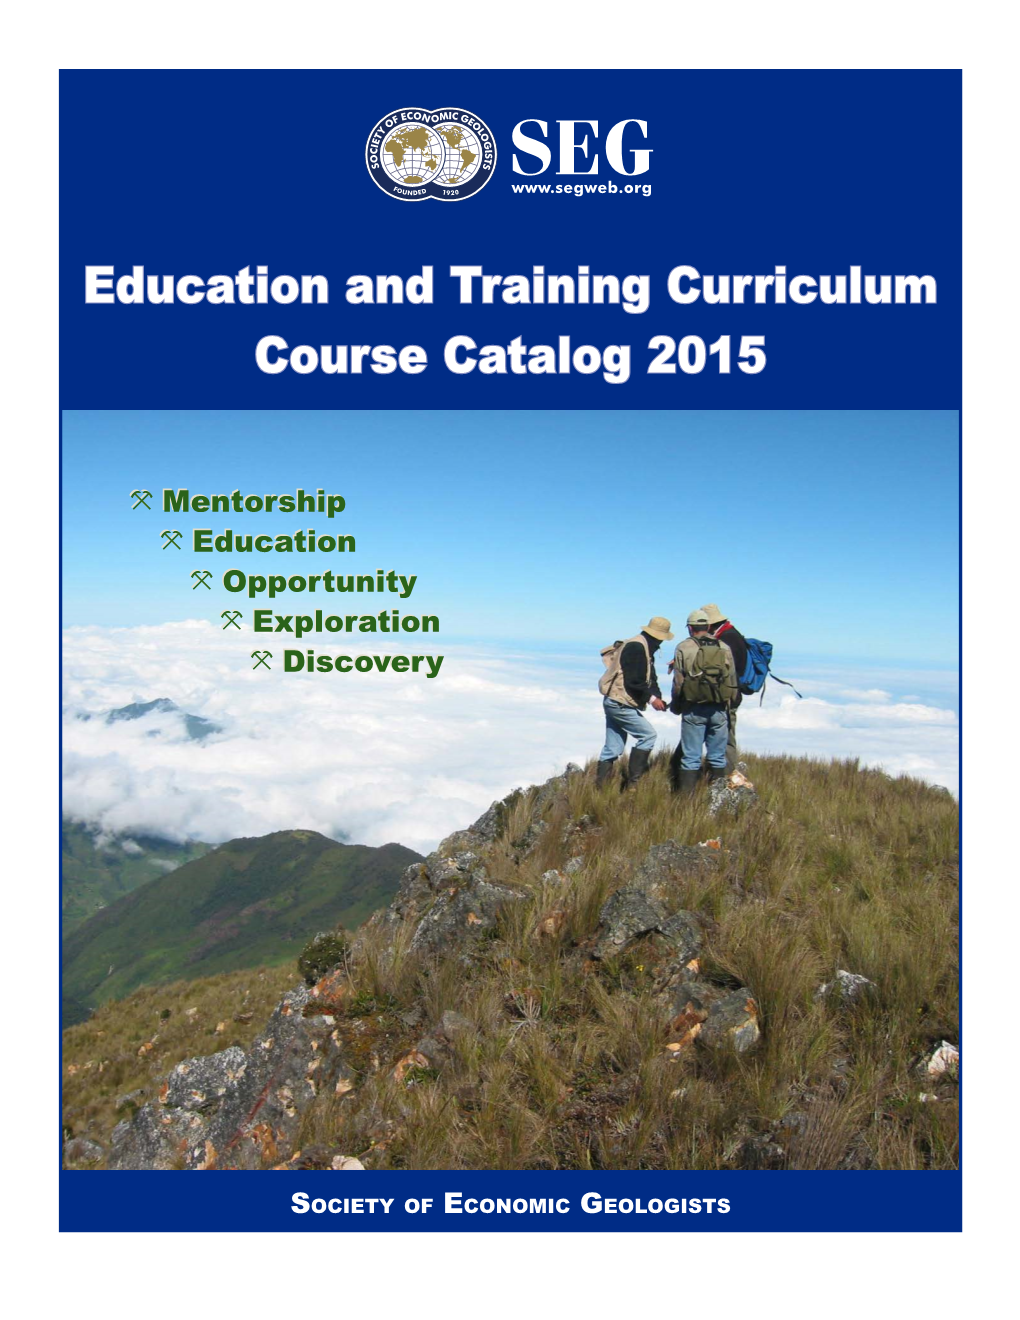 SEG Education and Training Curriculum Brochure (2015)